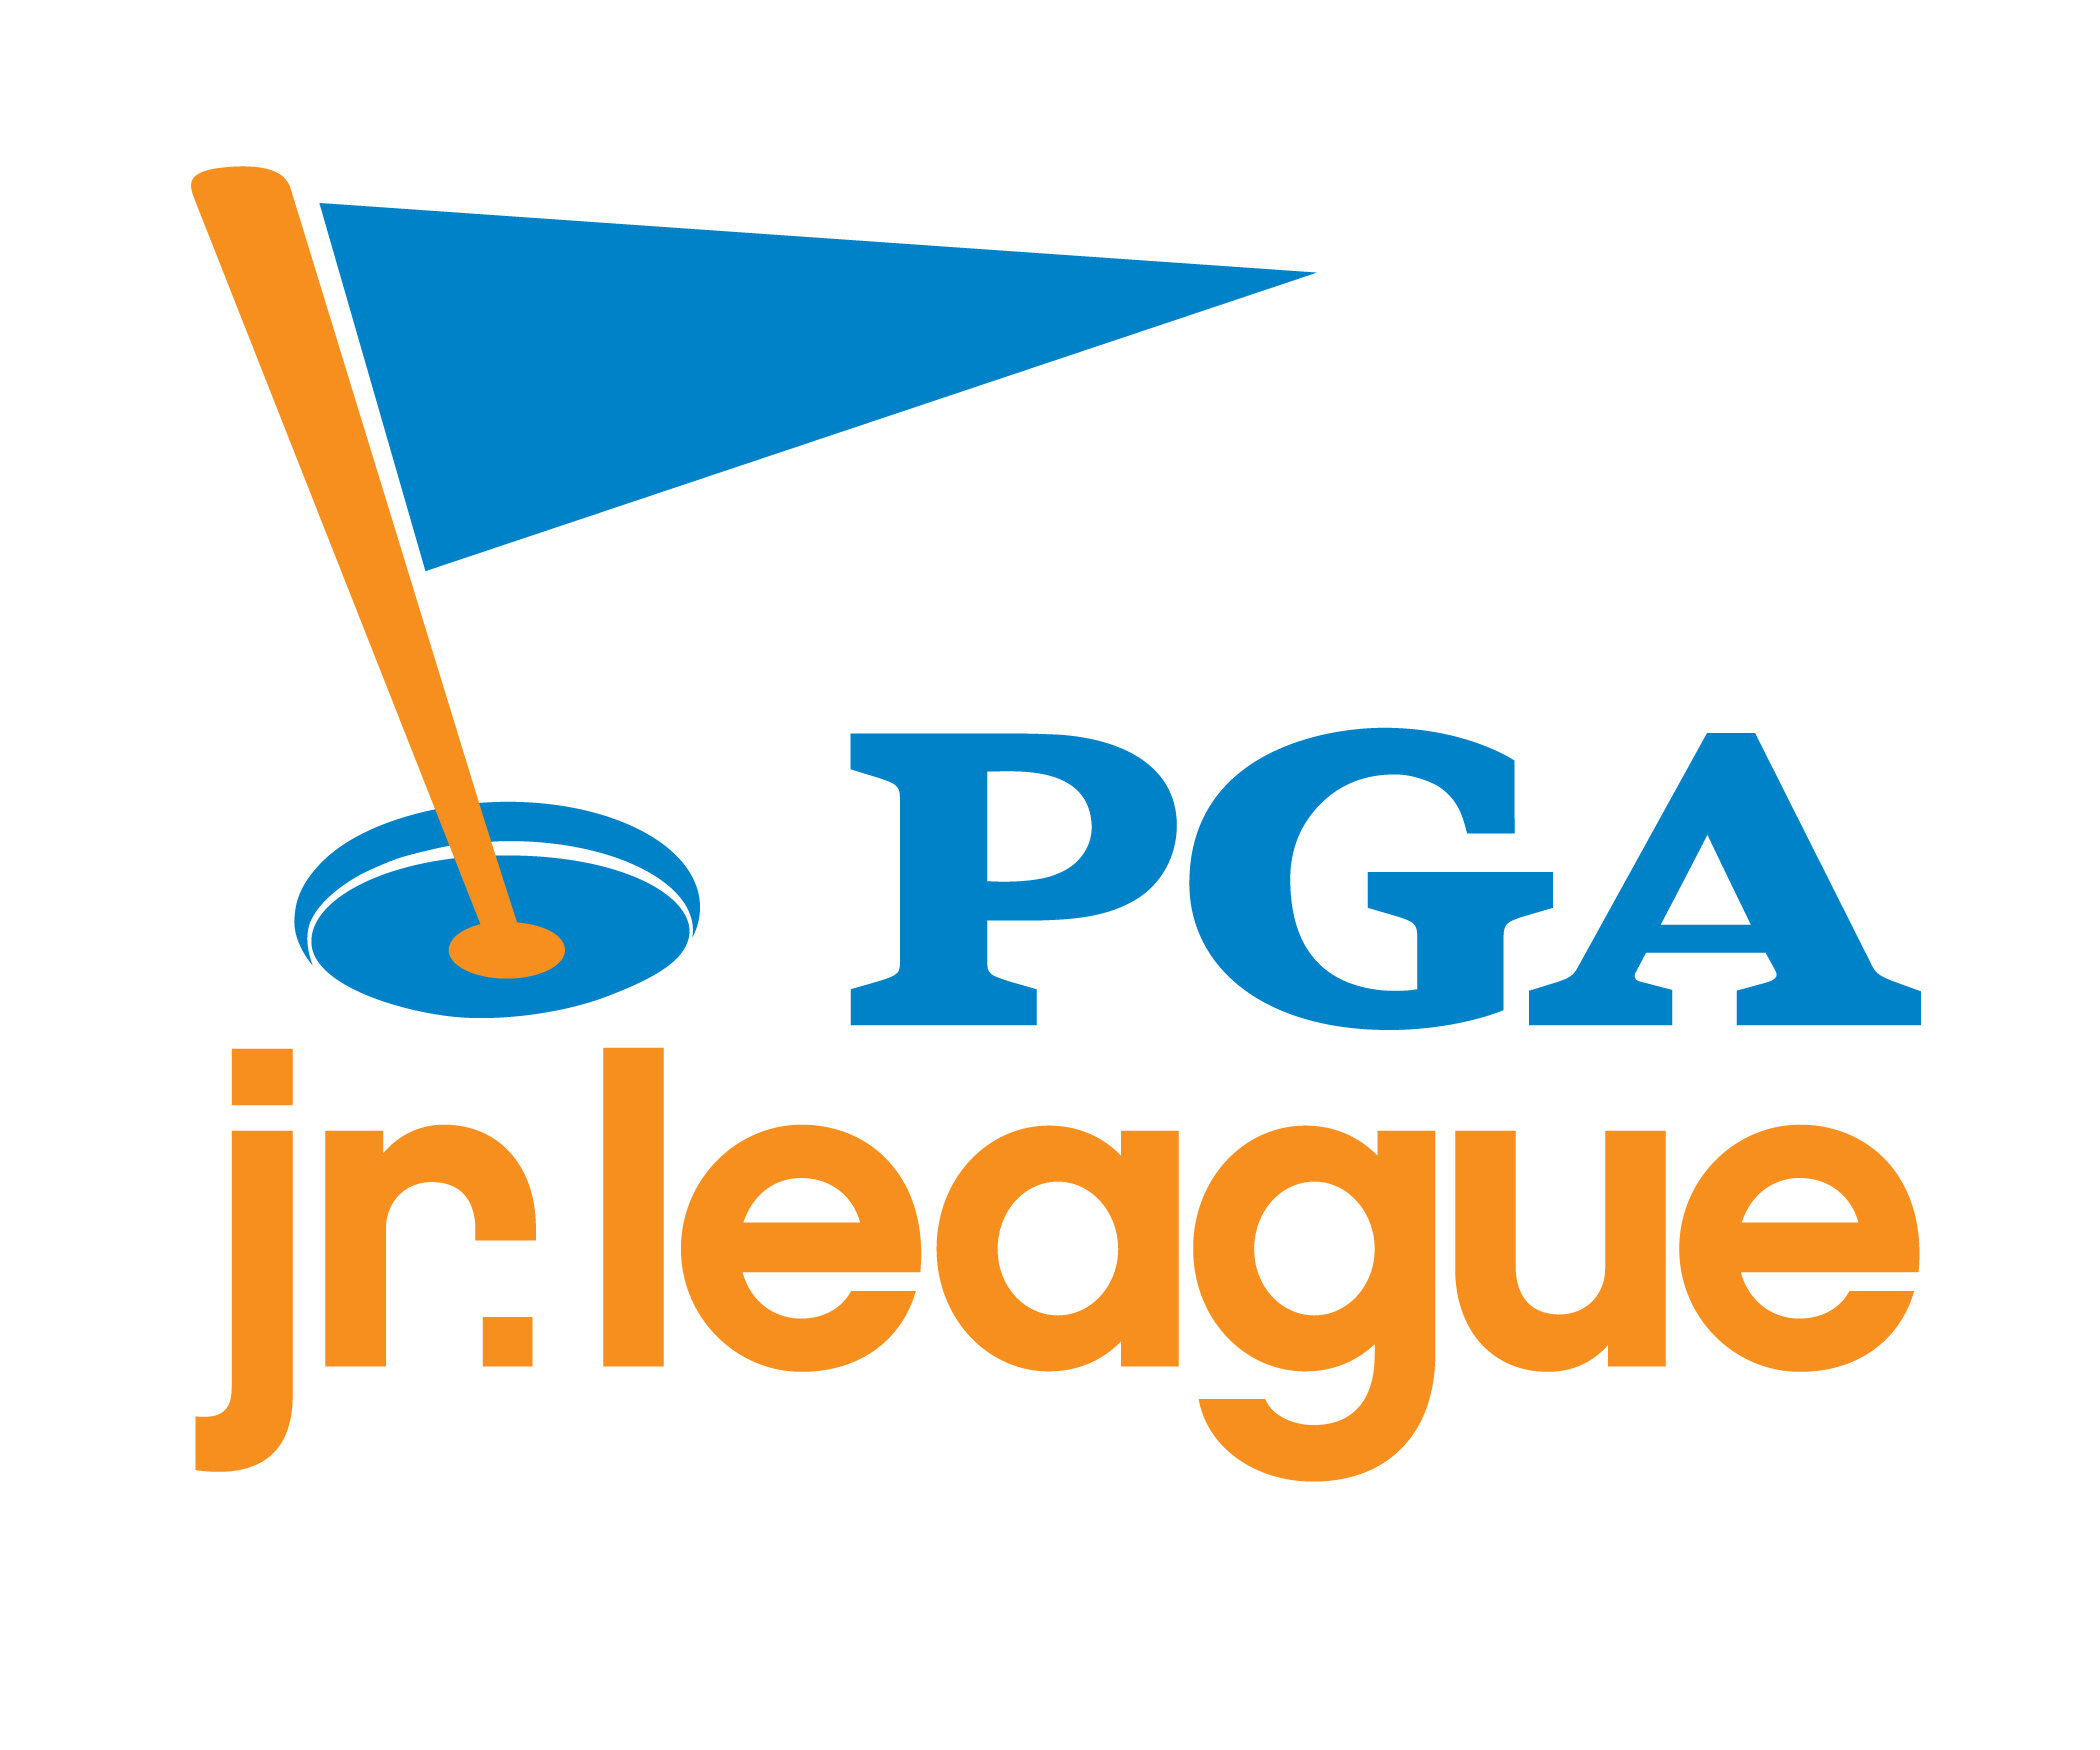 JR_League.jpg